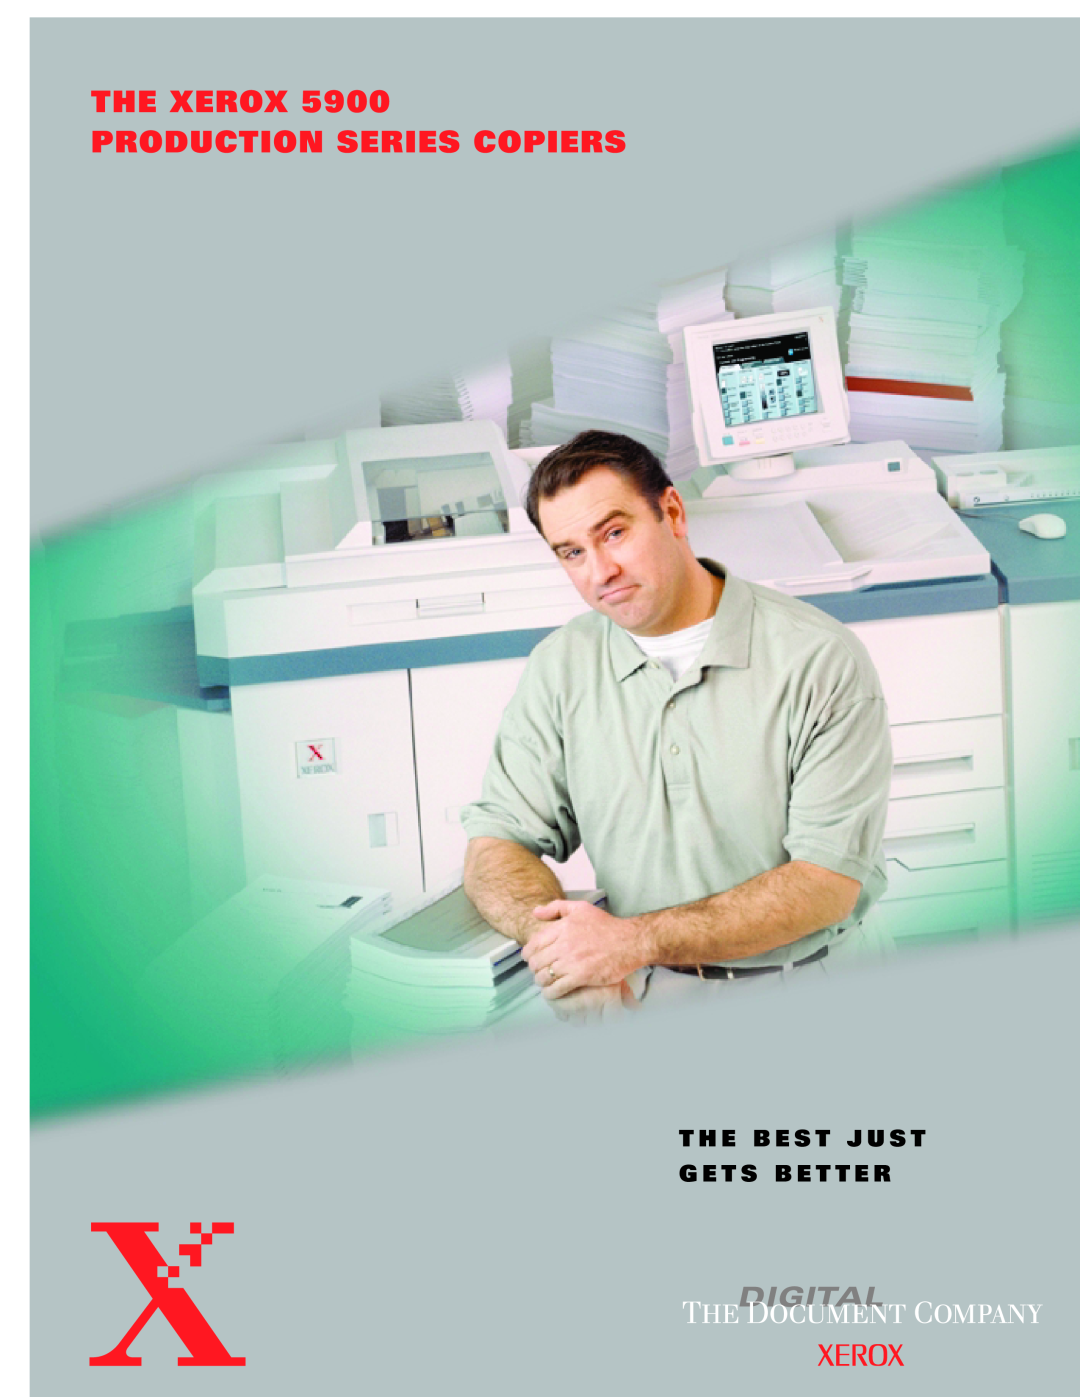 Xerox 5900 manual T H E B E S T J U S T G E T S B E T T E R, The Xerox Production Series Copiers 